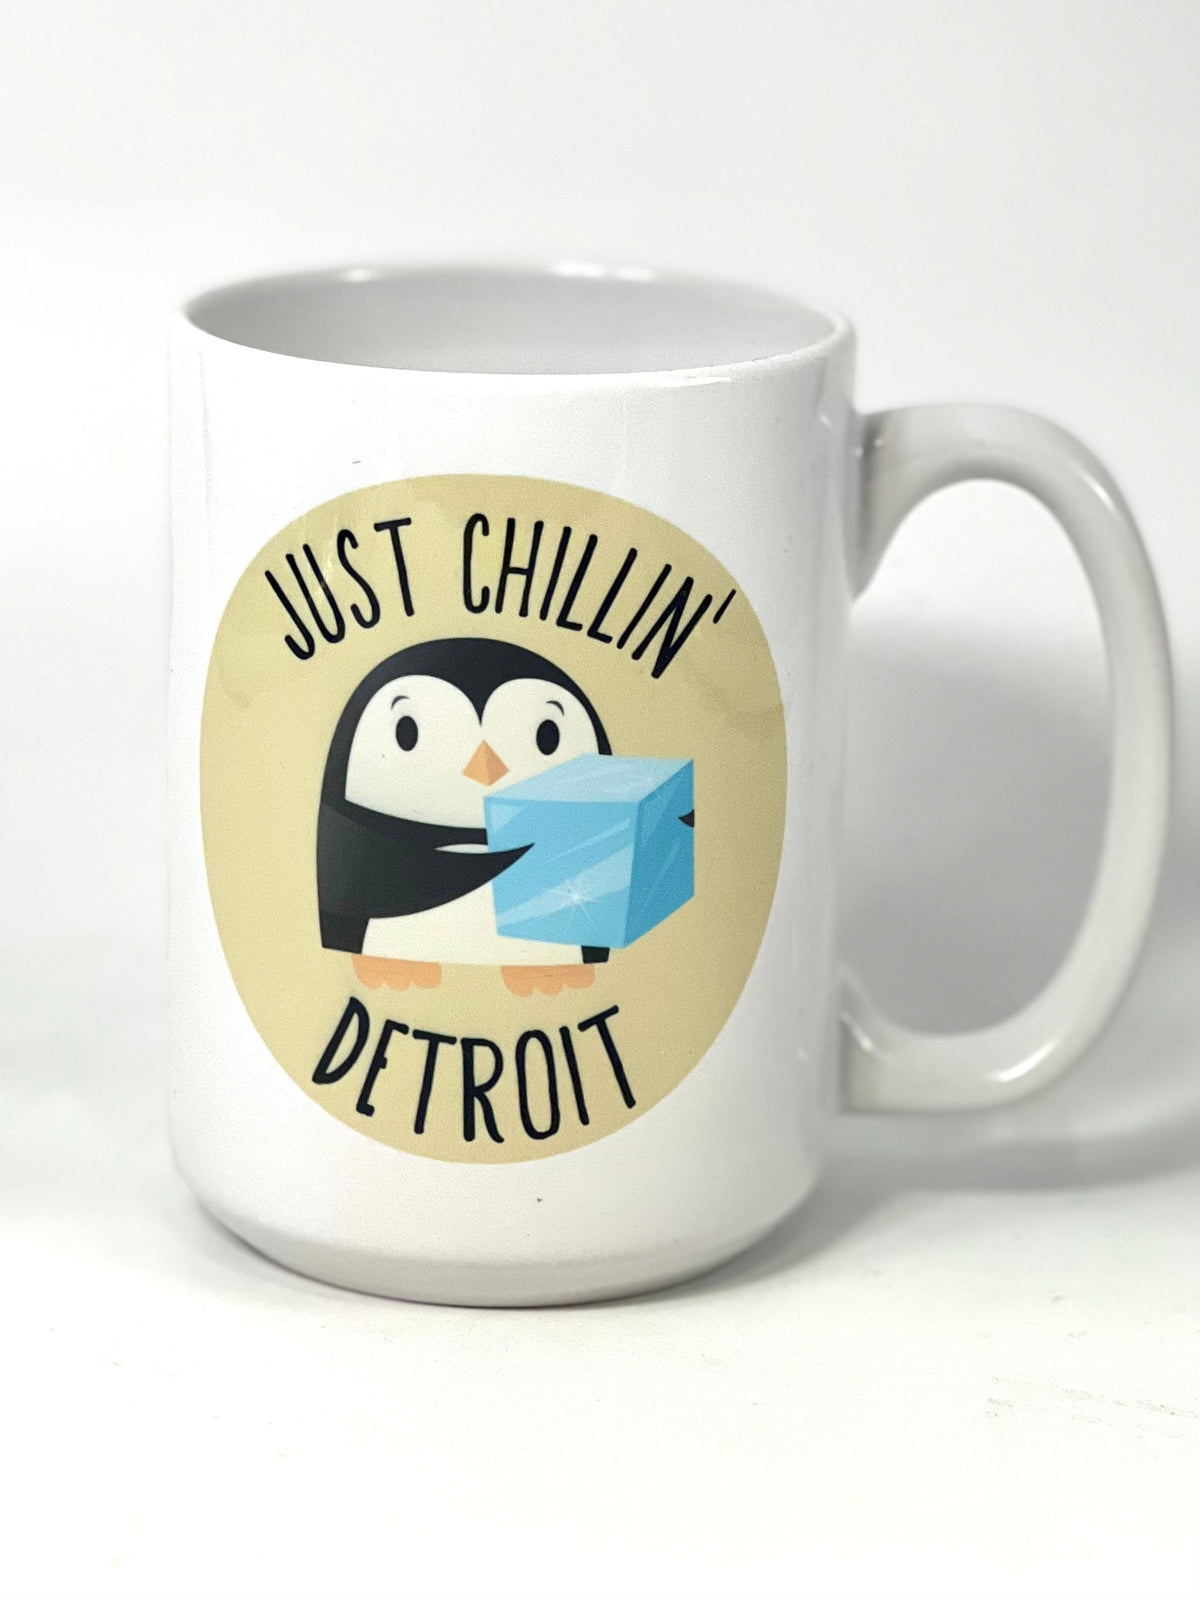 Just Chillin' in Detroit 16 oz Coffee Mug glass   